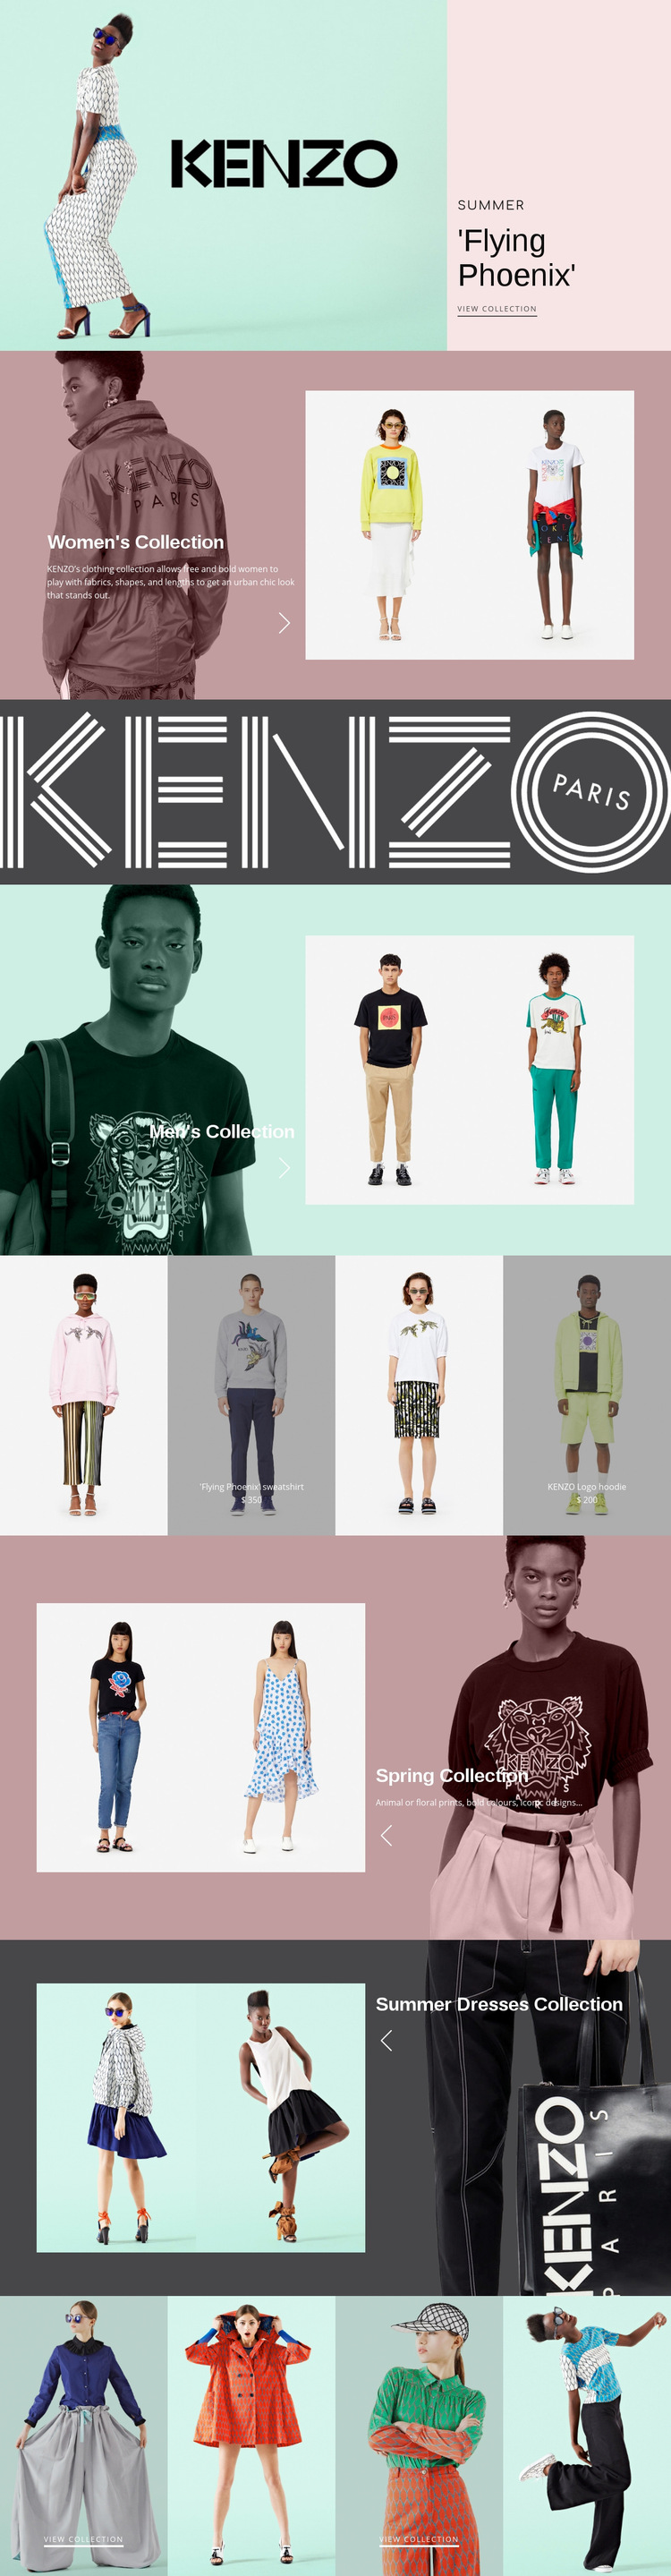 Atelier of modern fashion Web Page Design